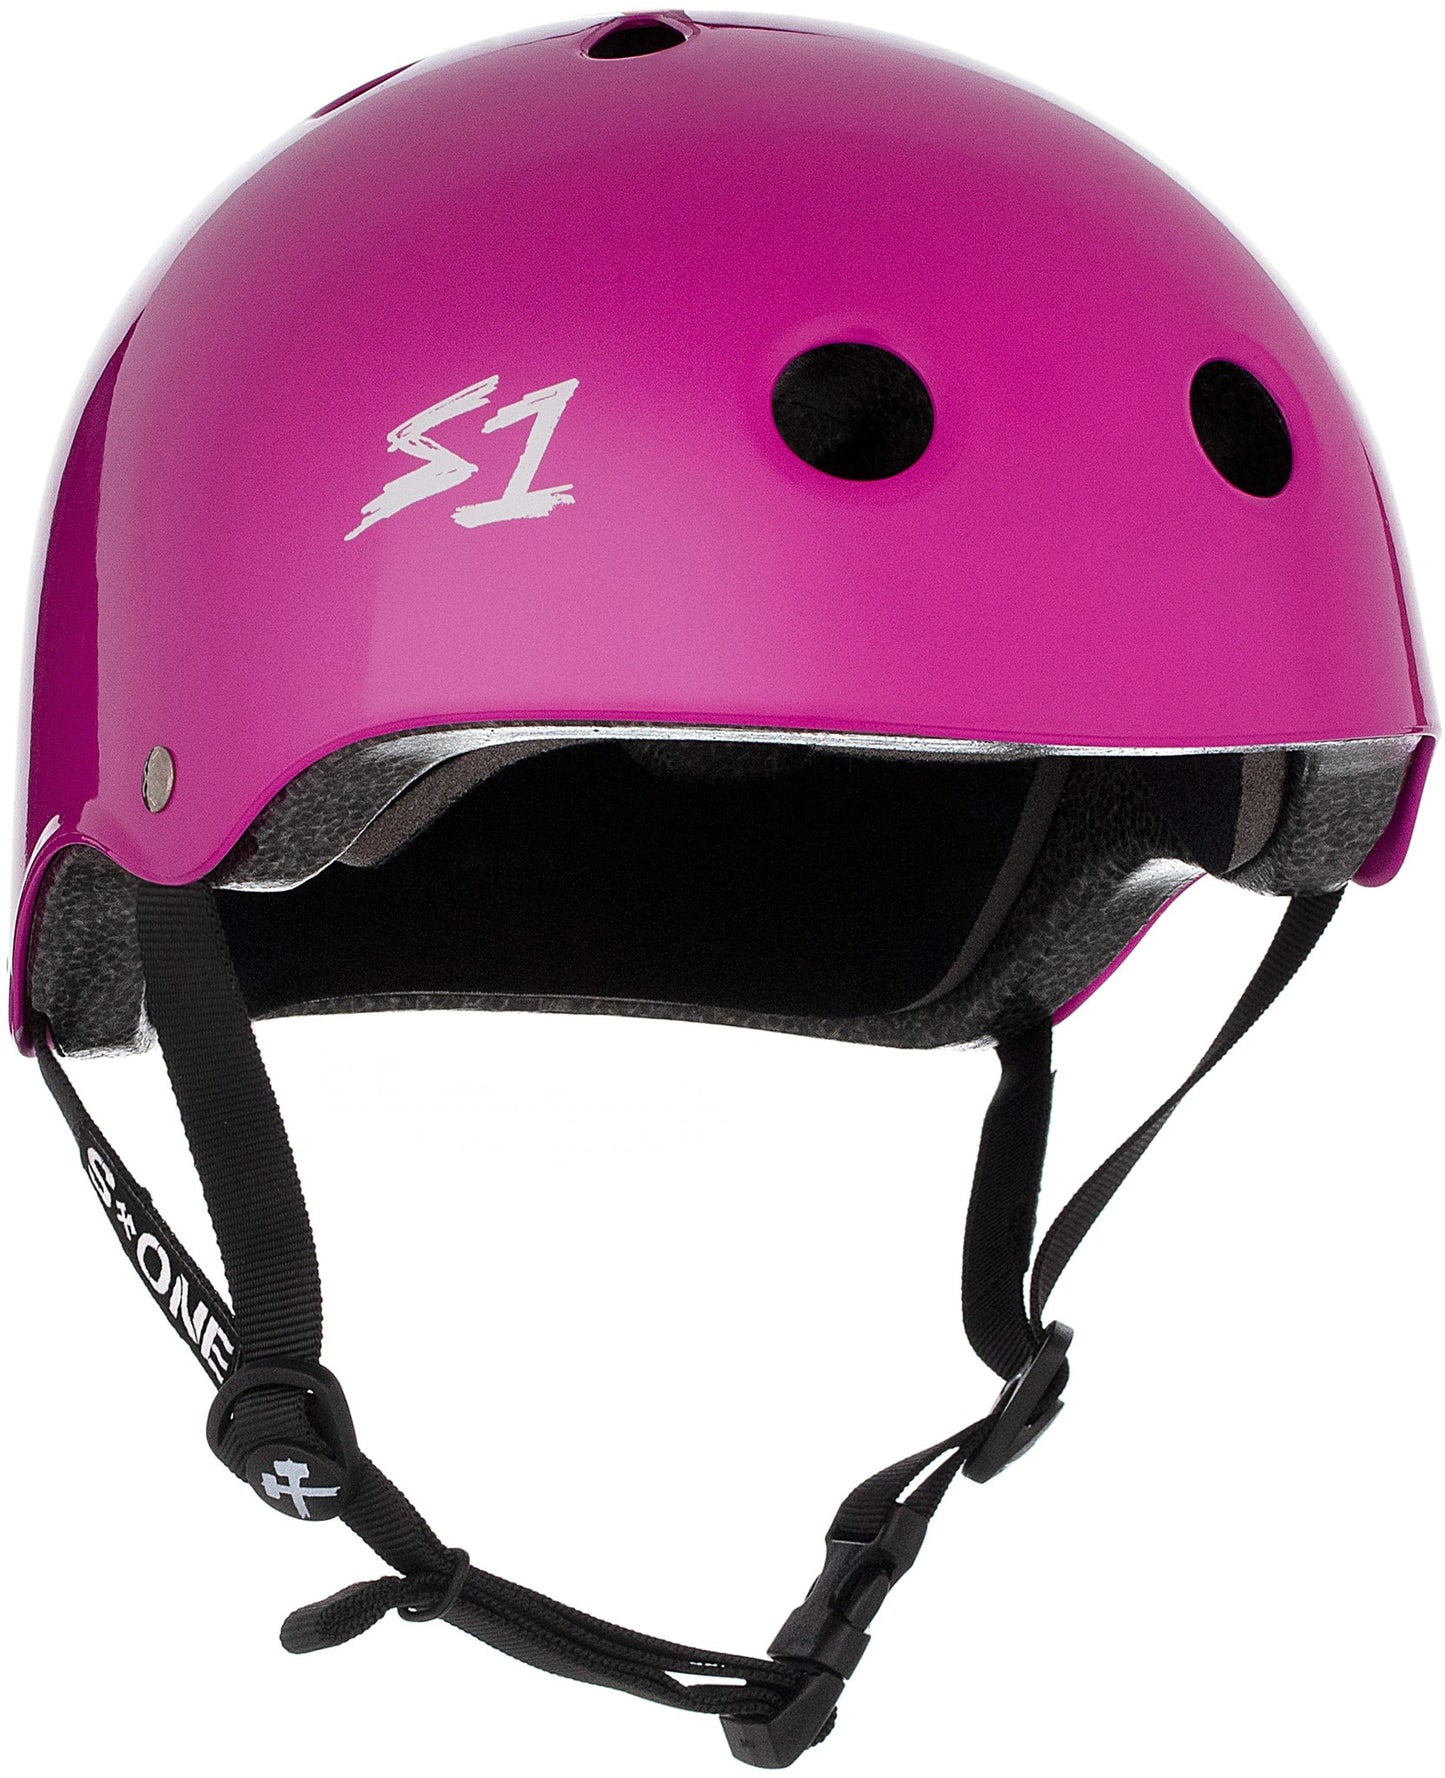 S One Lifer Helmet Skate - Bright Purple Gloss